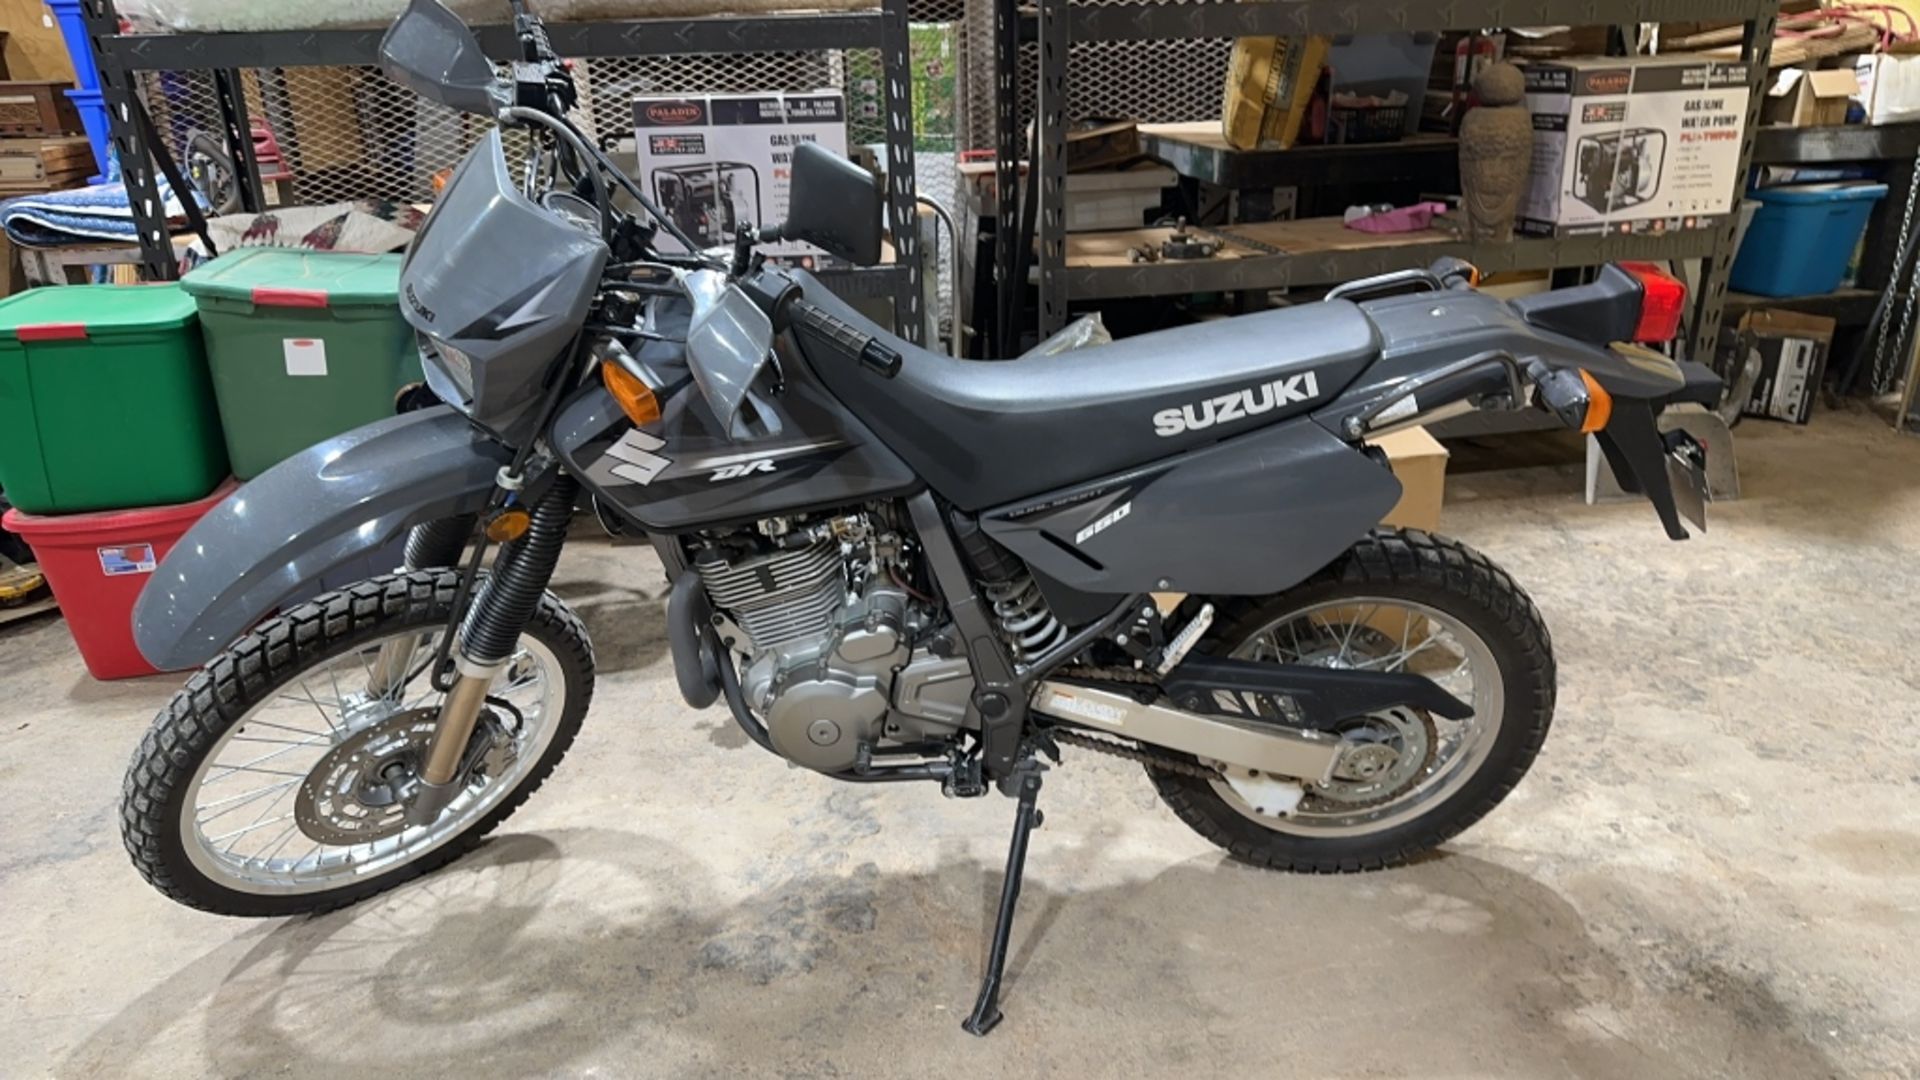 2012 Suzuki DR650S motorcycle - Image 27 of 27